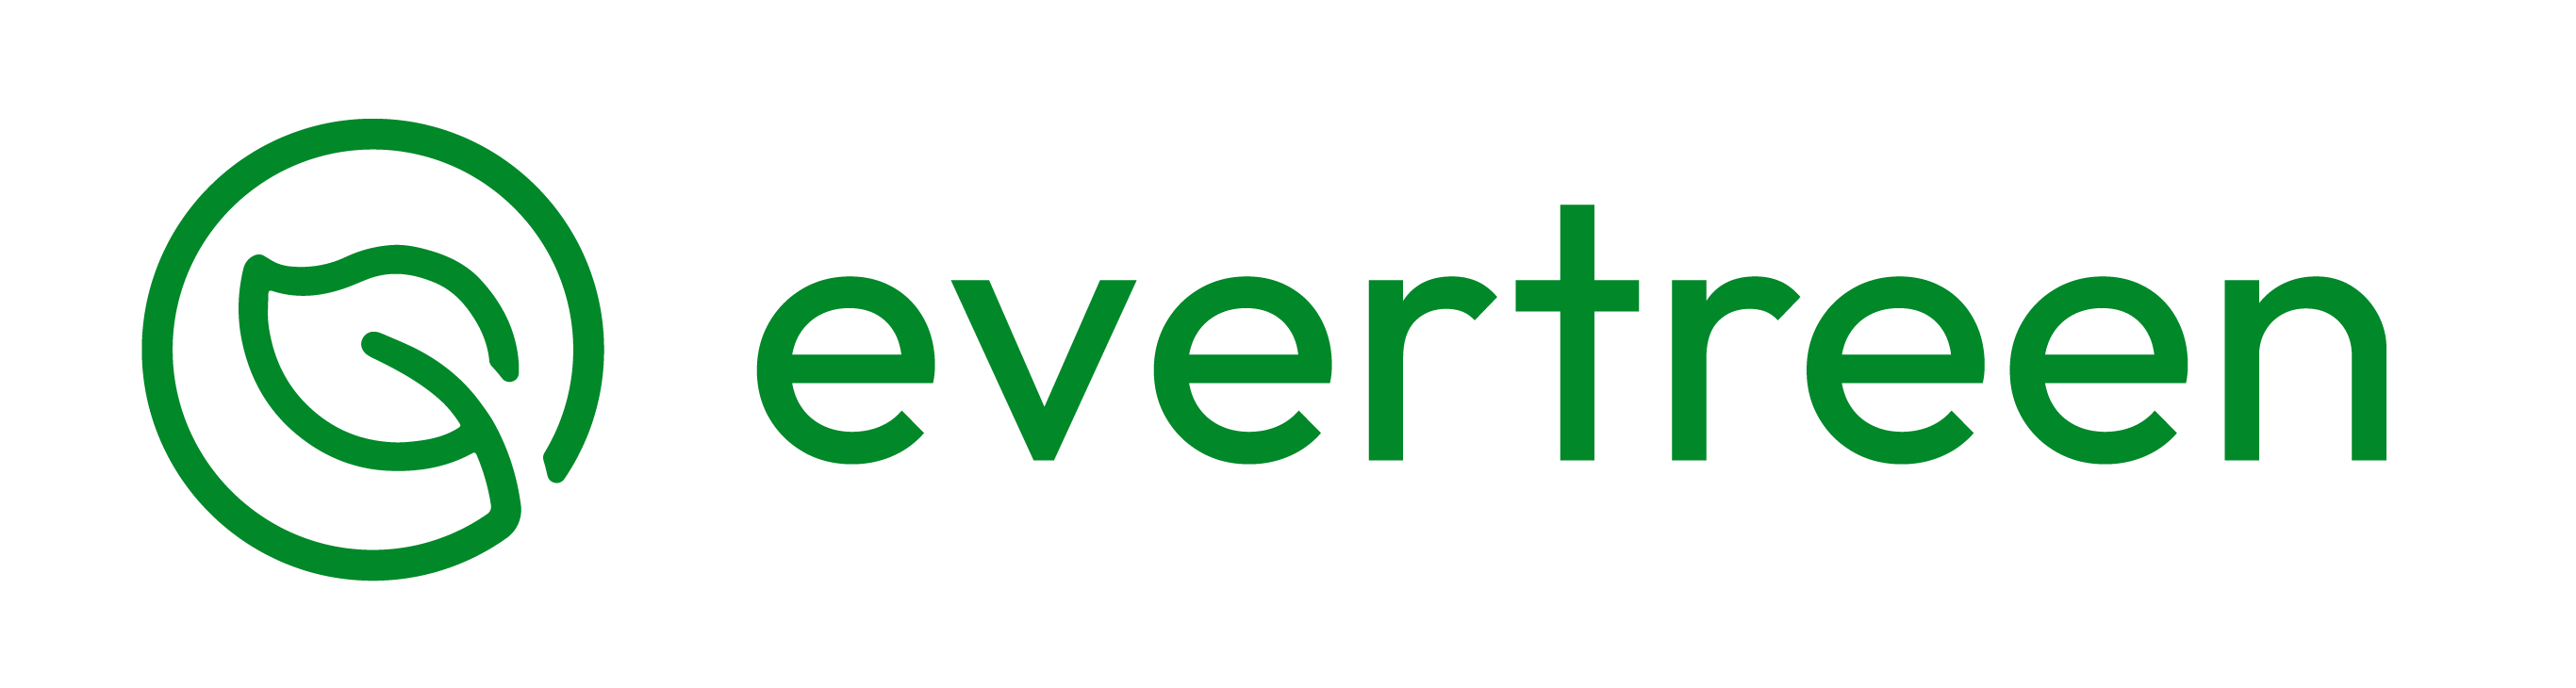 Evertreen Logo